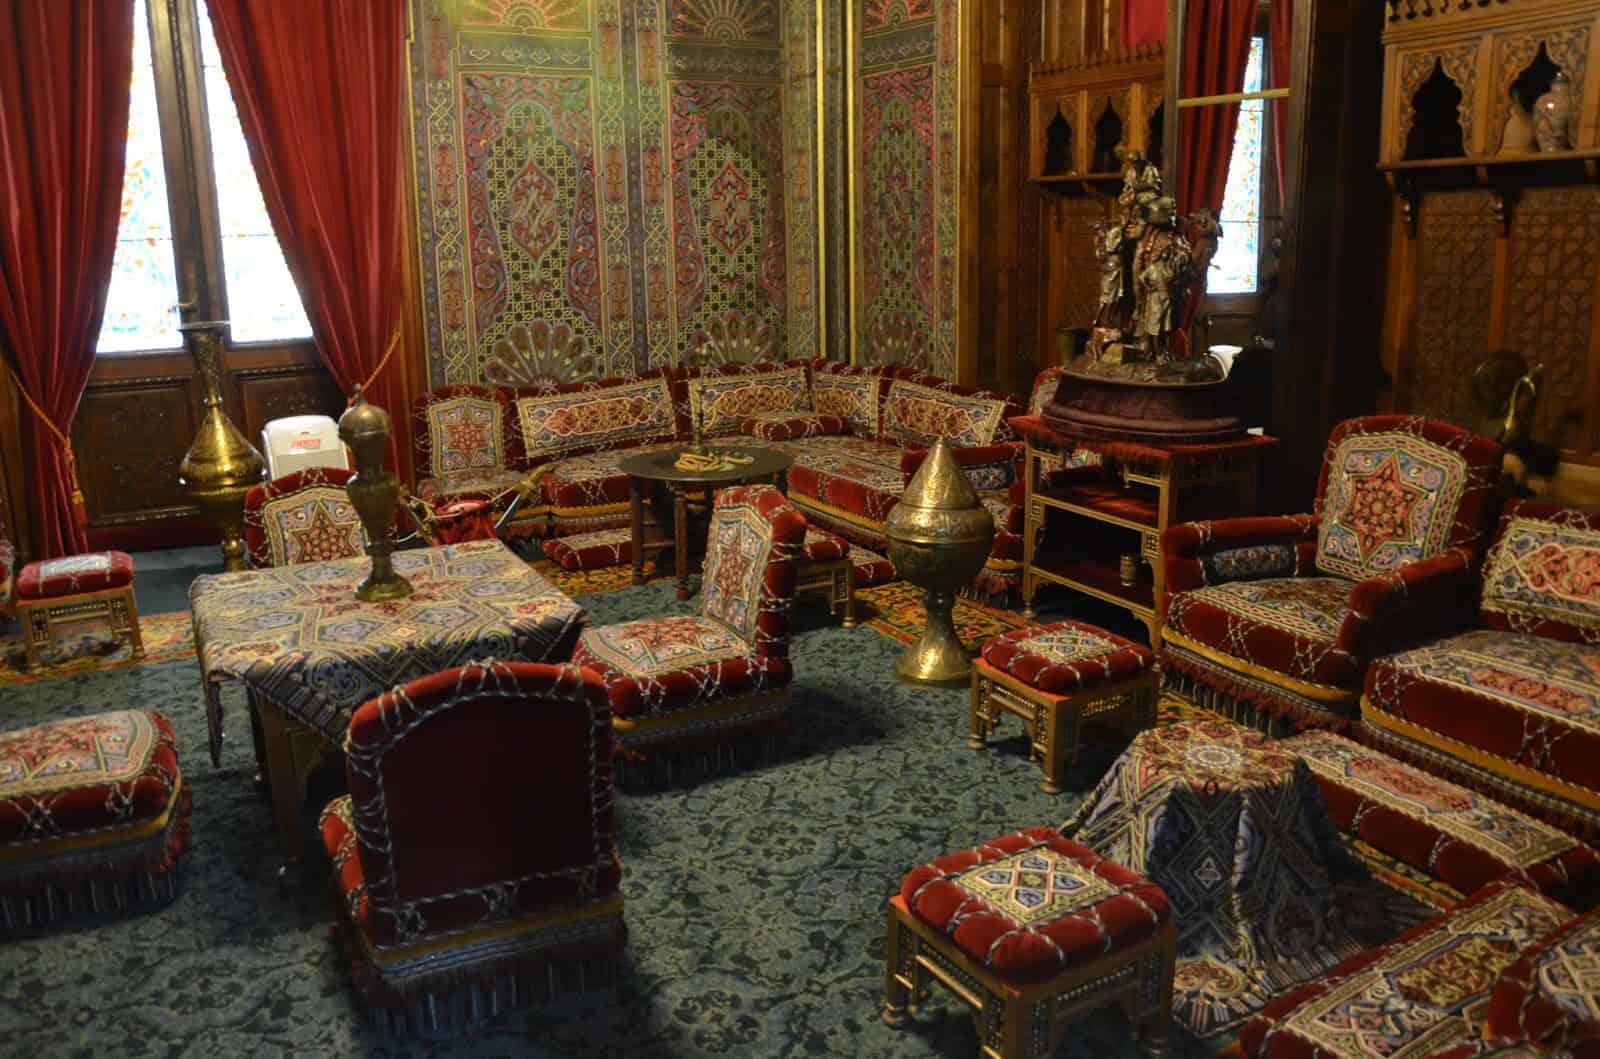 Turkish room at Peleș Castle in Sinaia, Romania